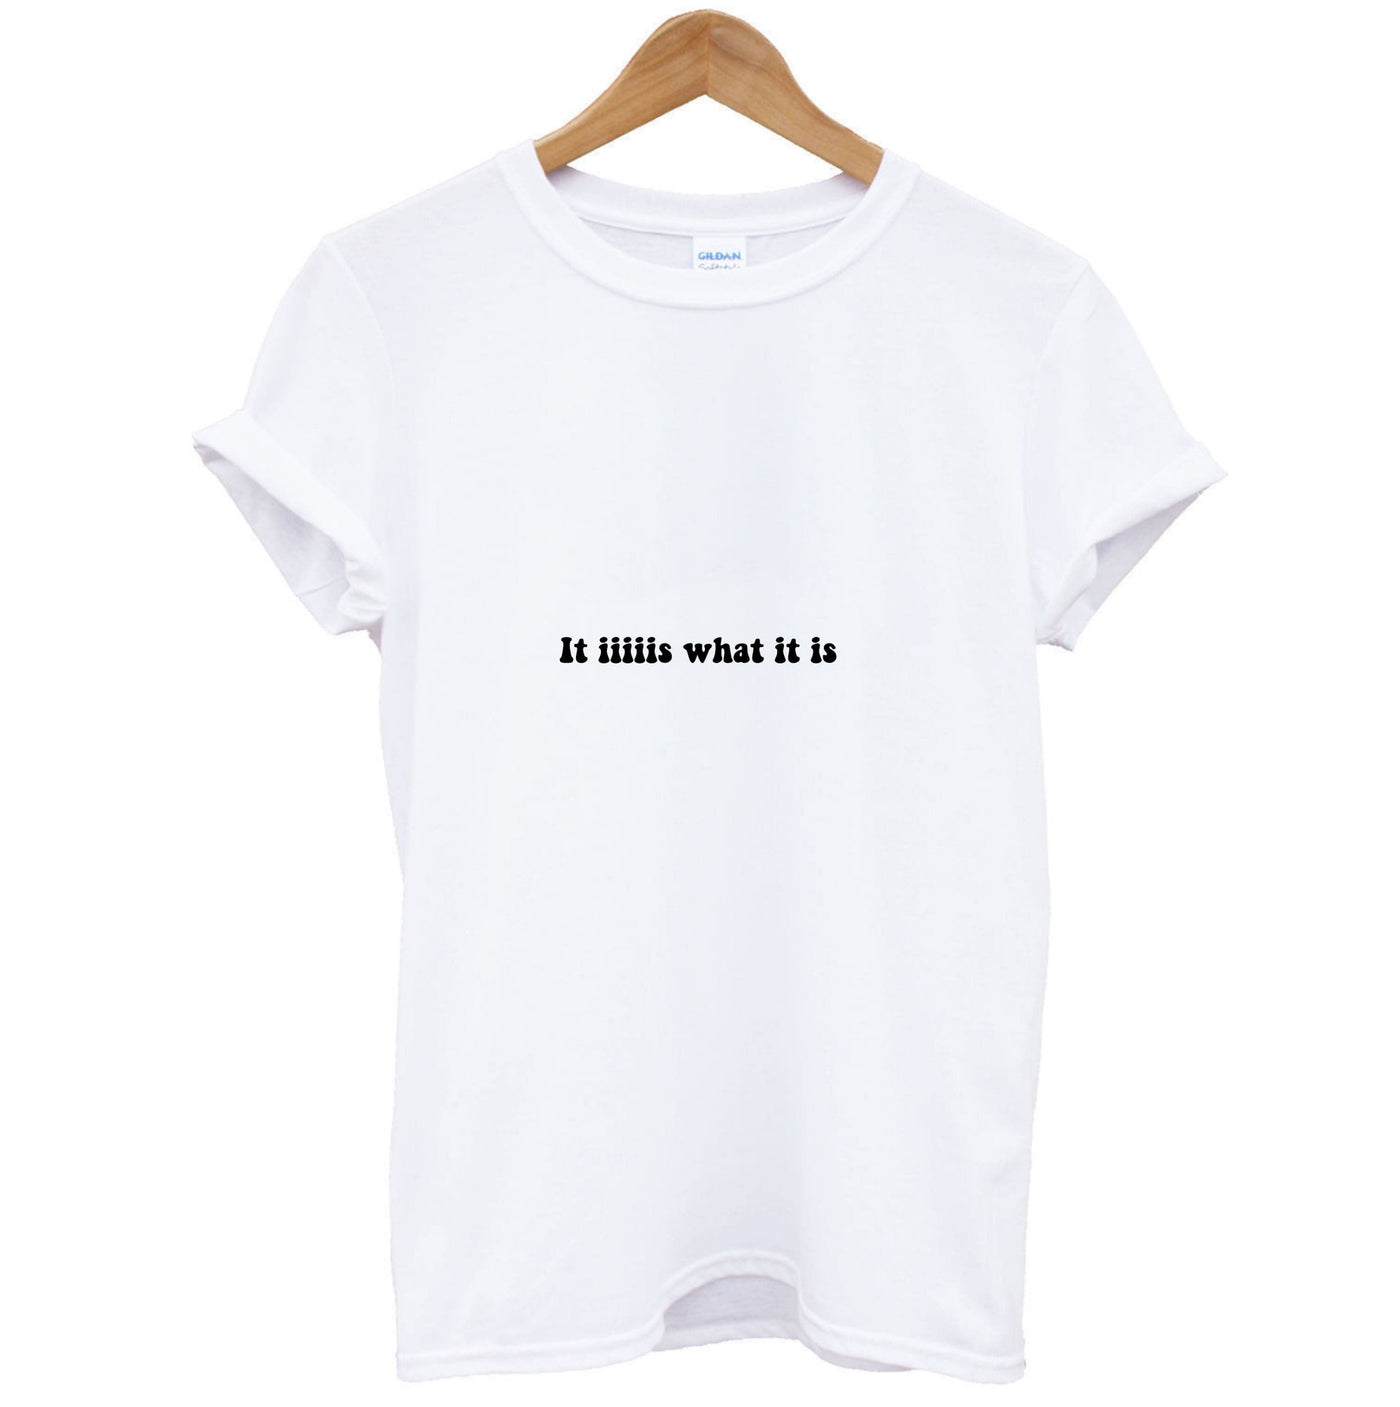 It Iiiiis What It Is - Islanders T-Shirt